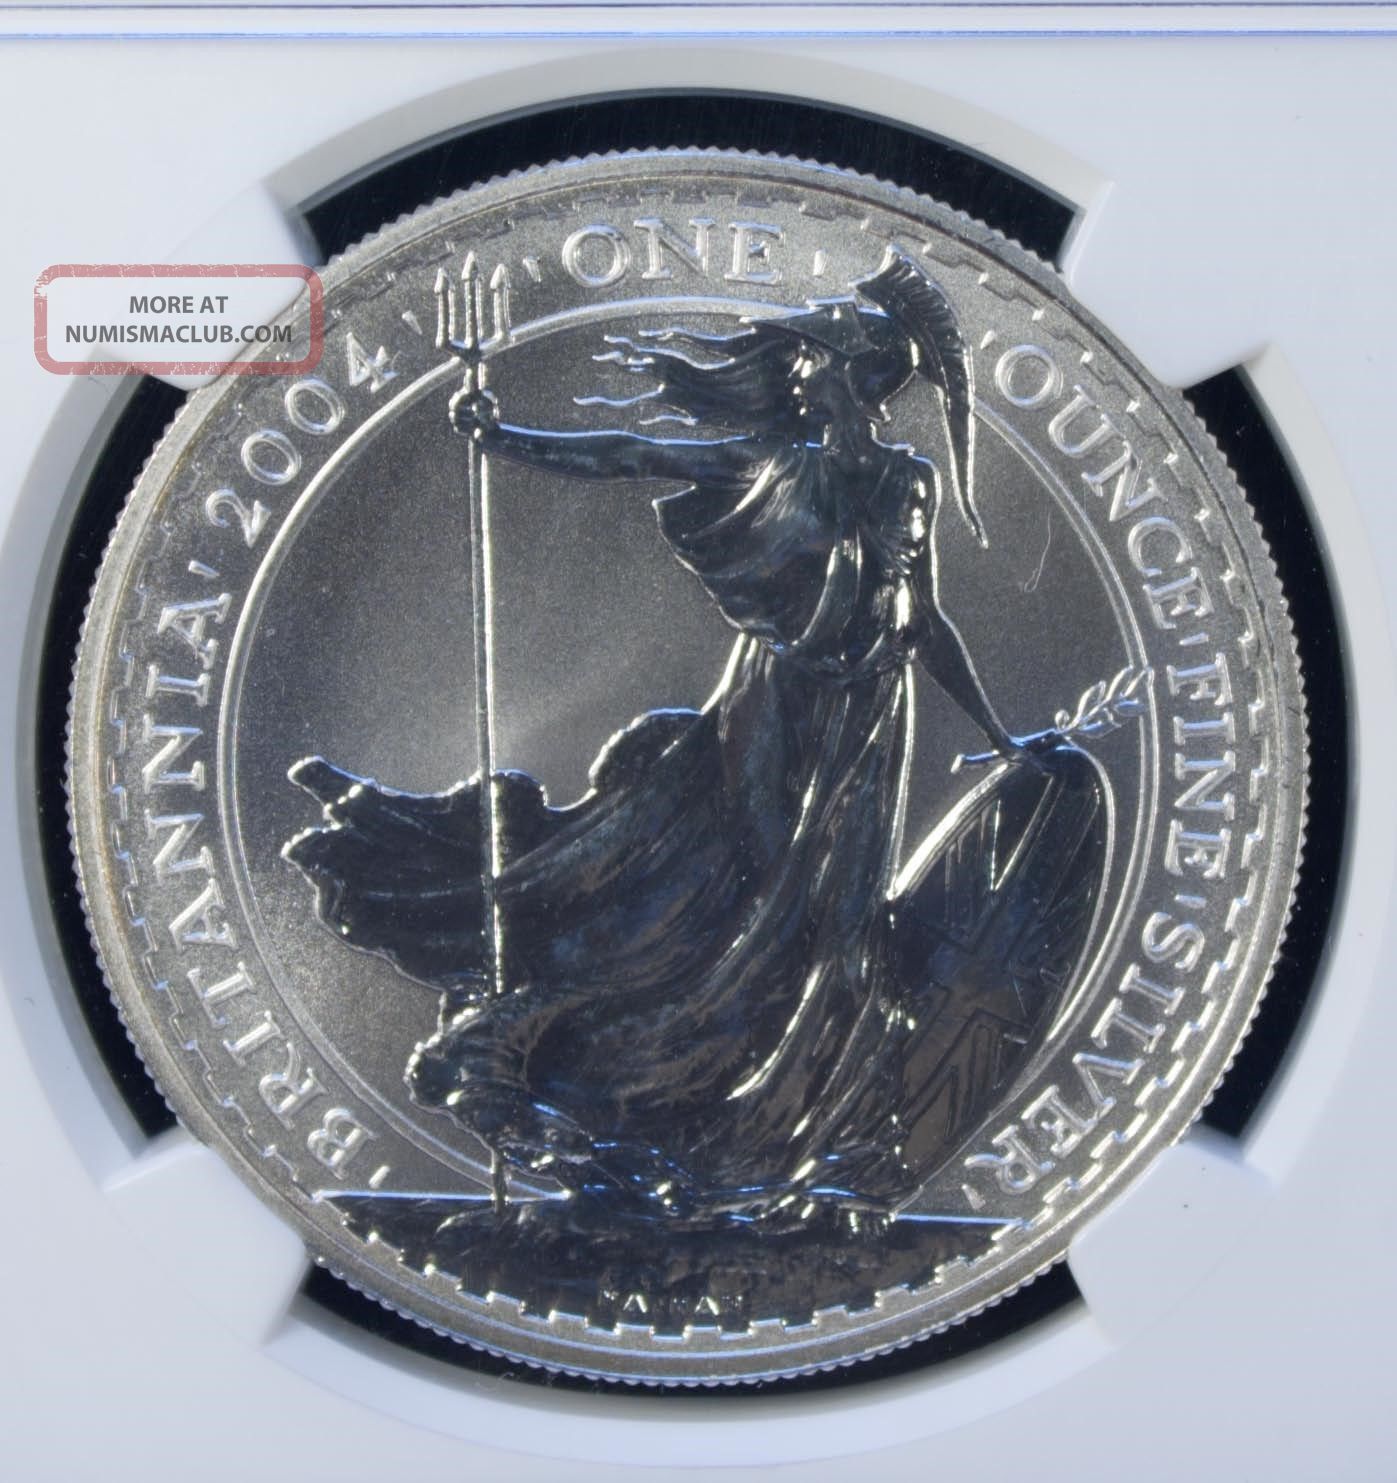 2004 Great Britain 2 Pound Silver 1 Oz. Ngc Ms 65 Unc Britannia